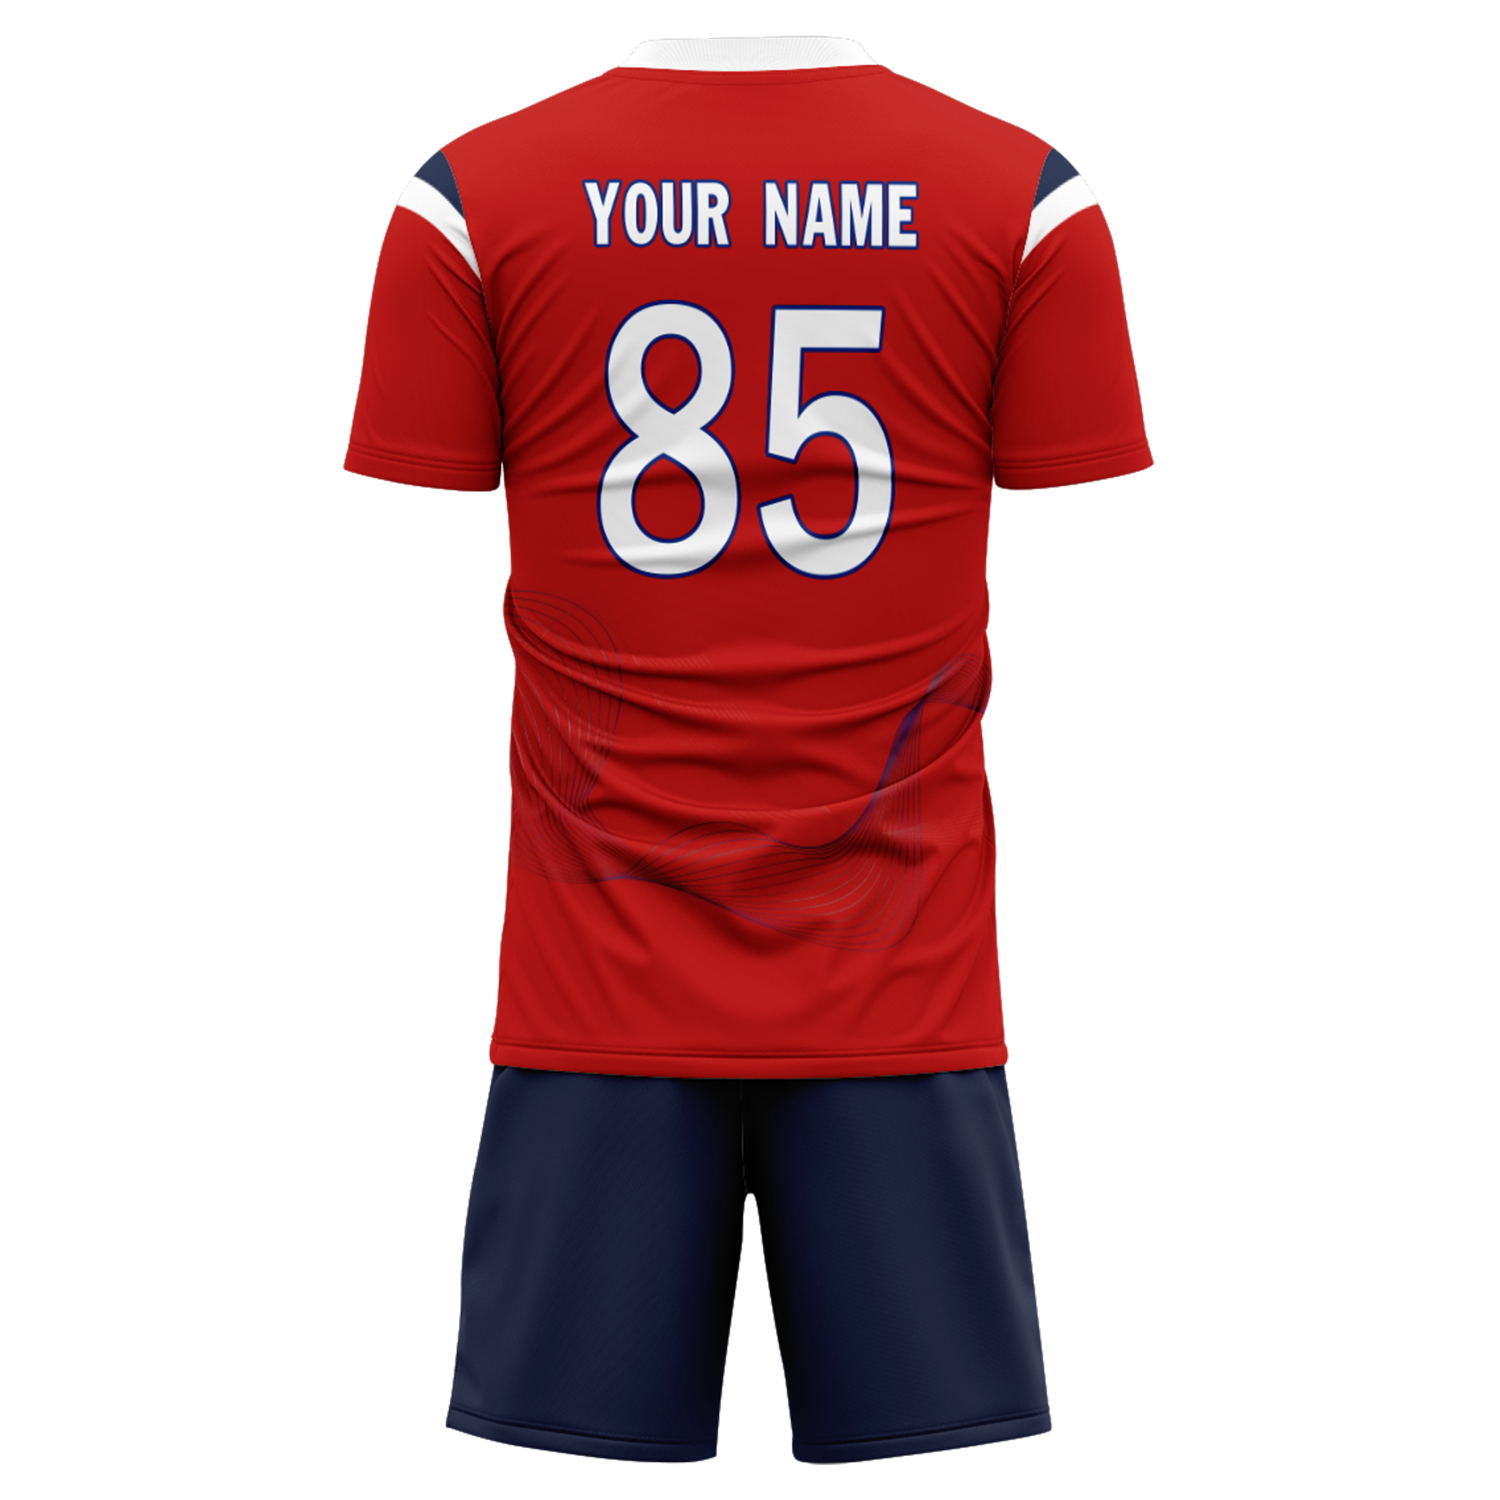 Custom South Korea Team Football Suits Personalized Design Print on Demand Soccer Jerseys